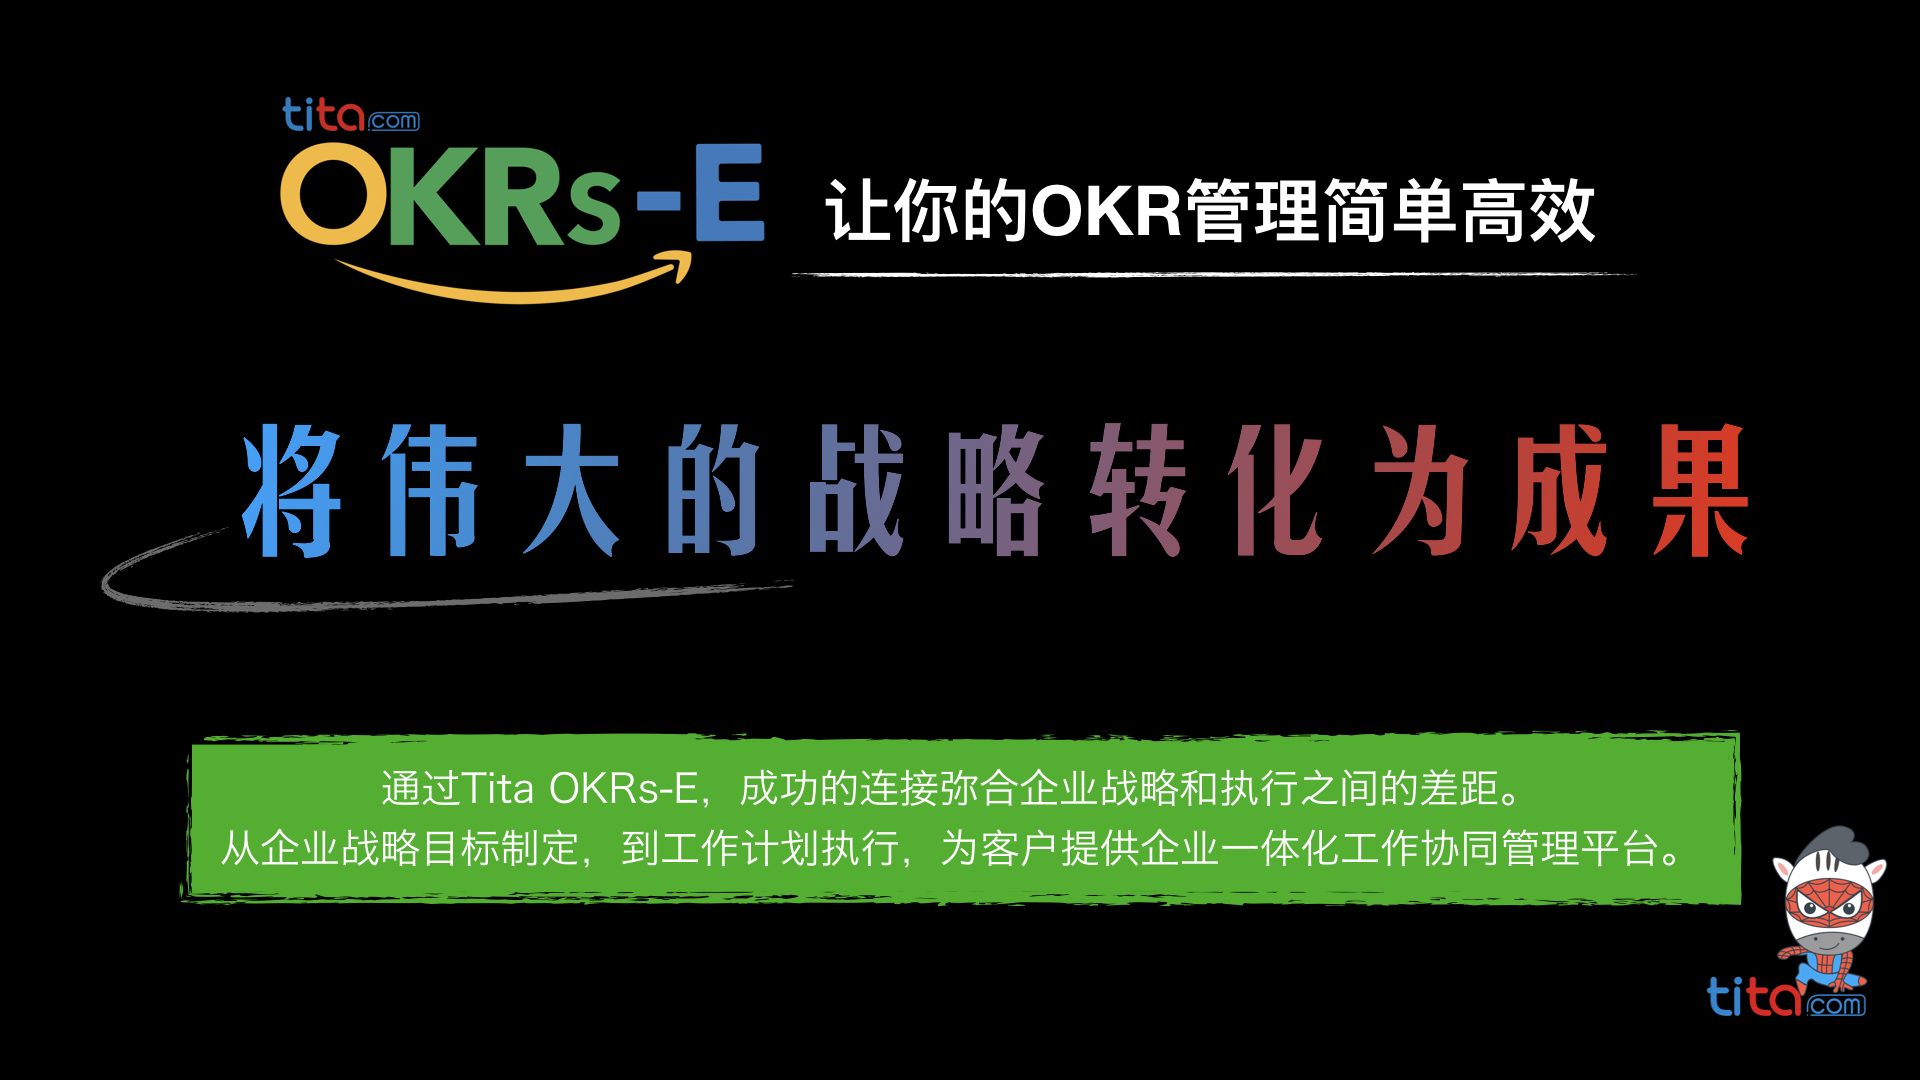 OKRs-E 目标管理框架（图片来源tita.com）
